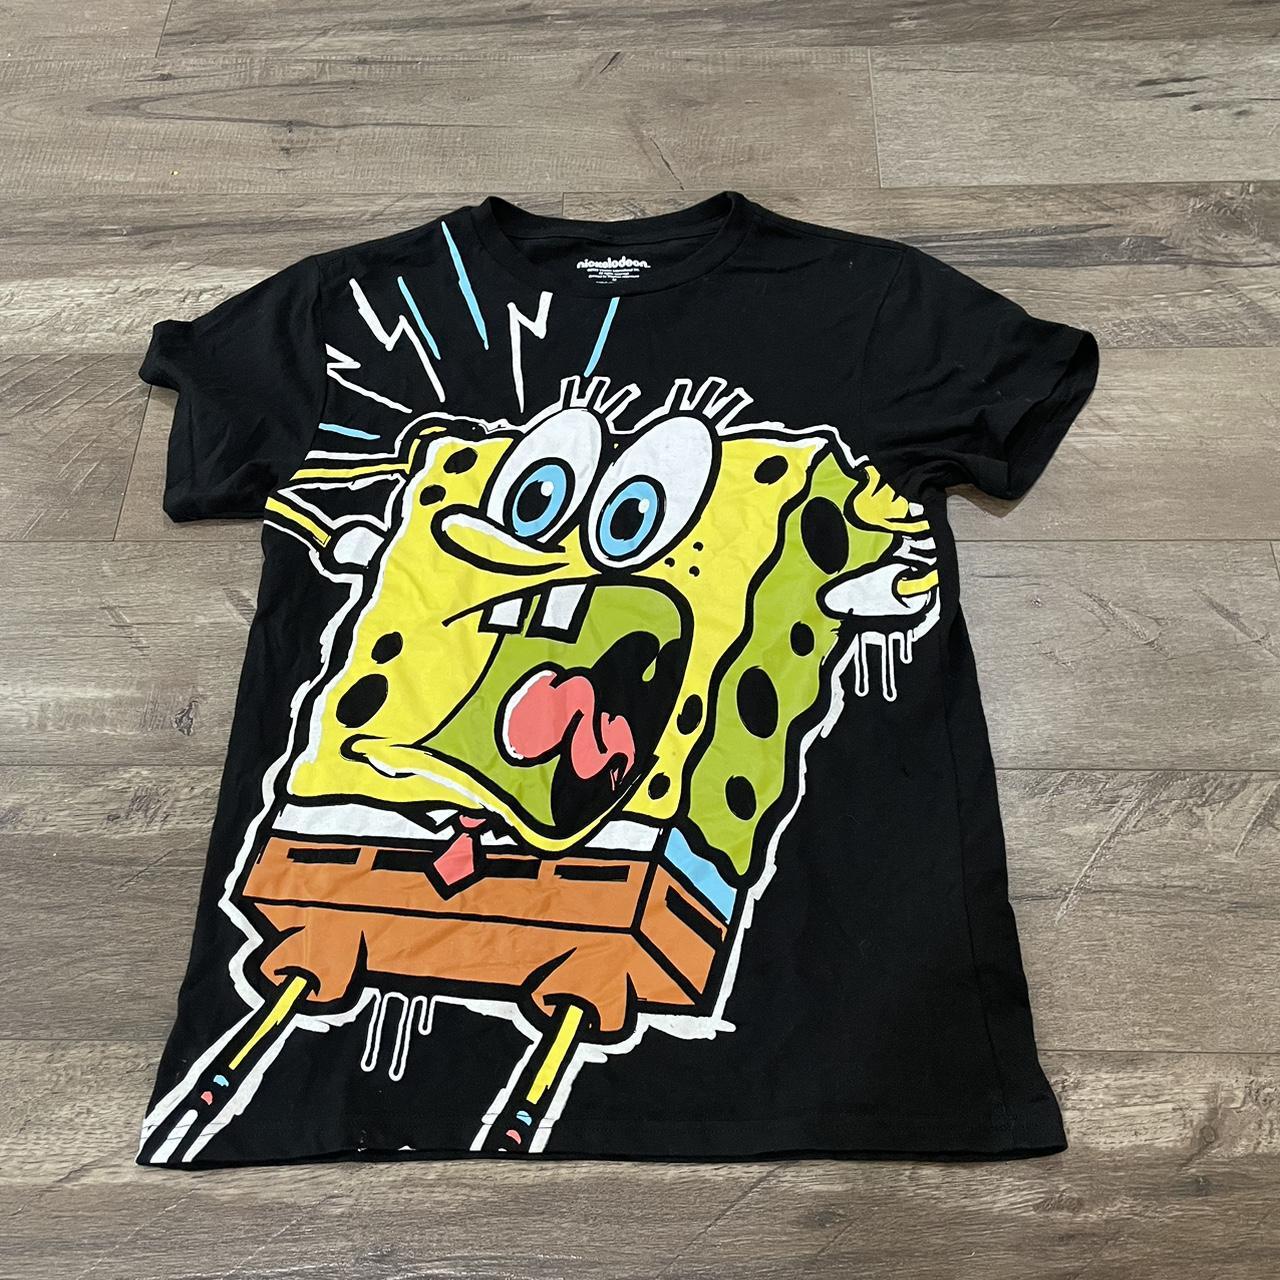 Nickelodeon SpongeBob T-shirt Amazing condition no... - Depop